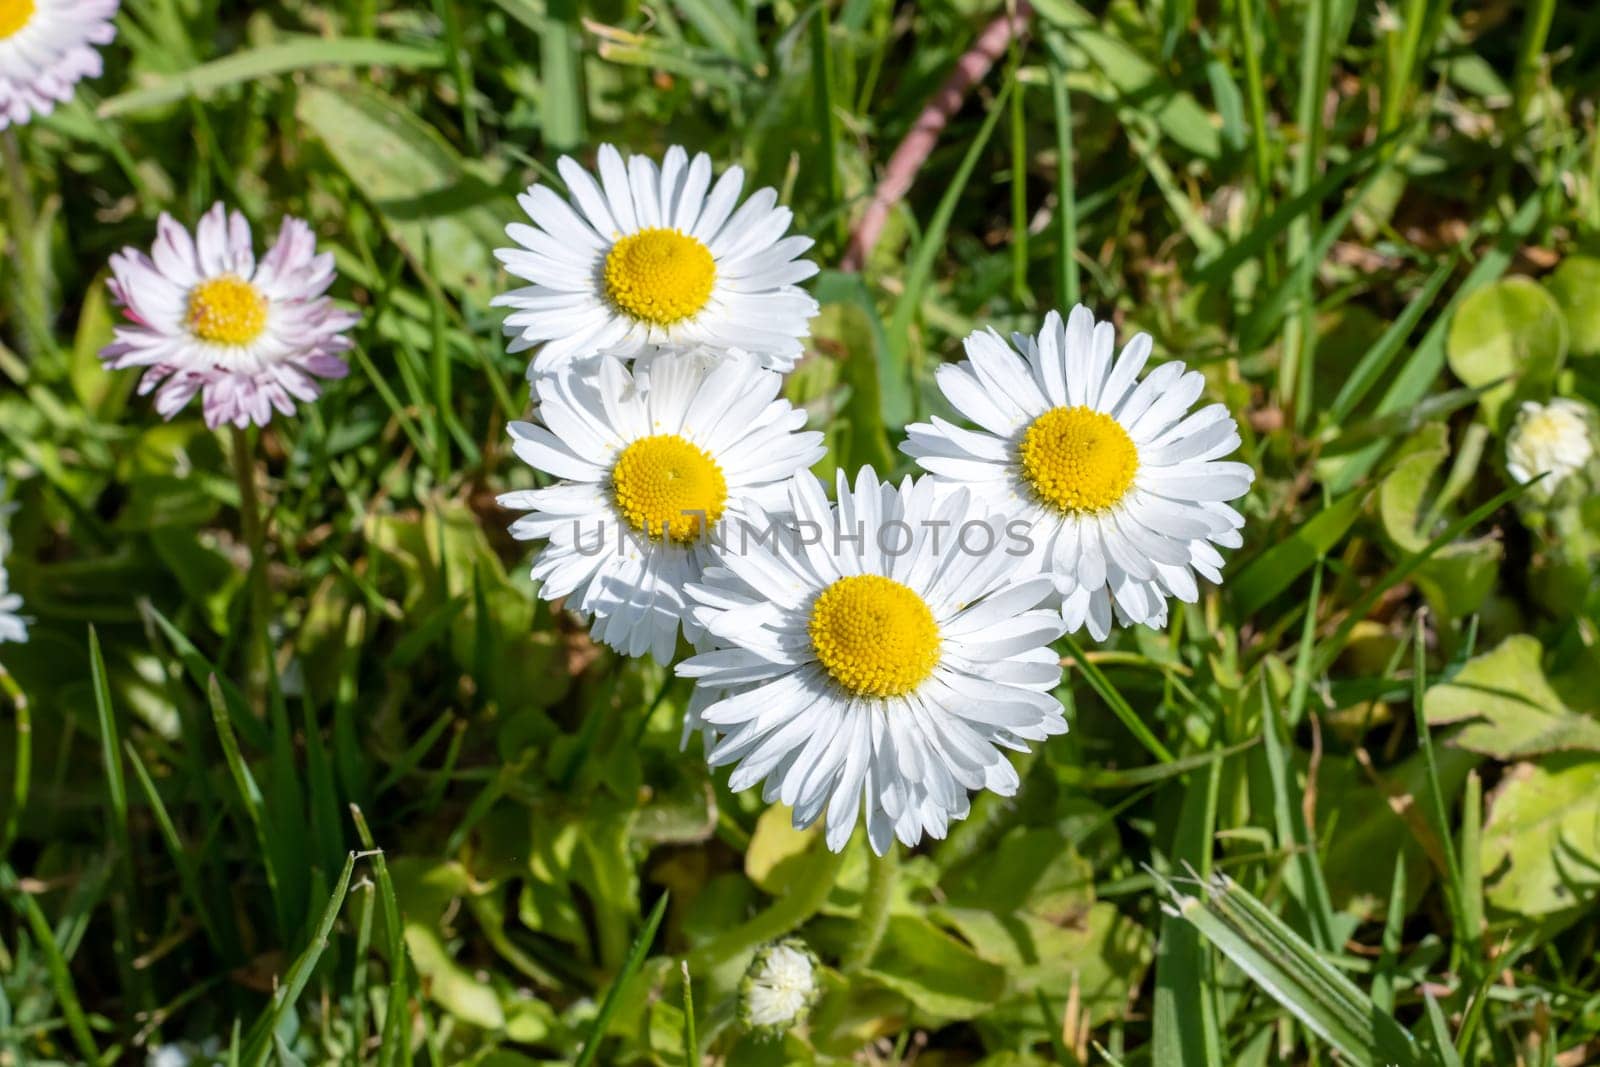 Small daisy flowers among green grass close up